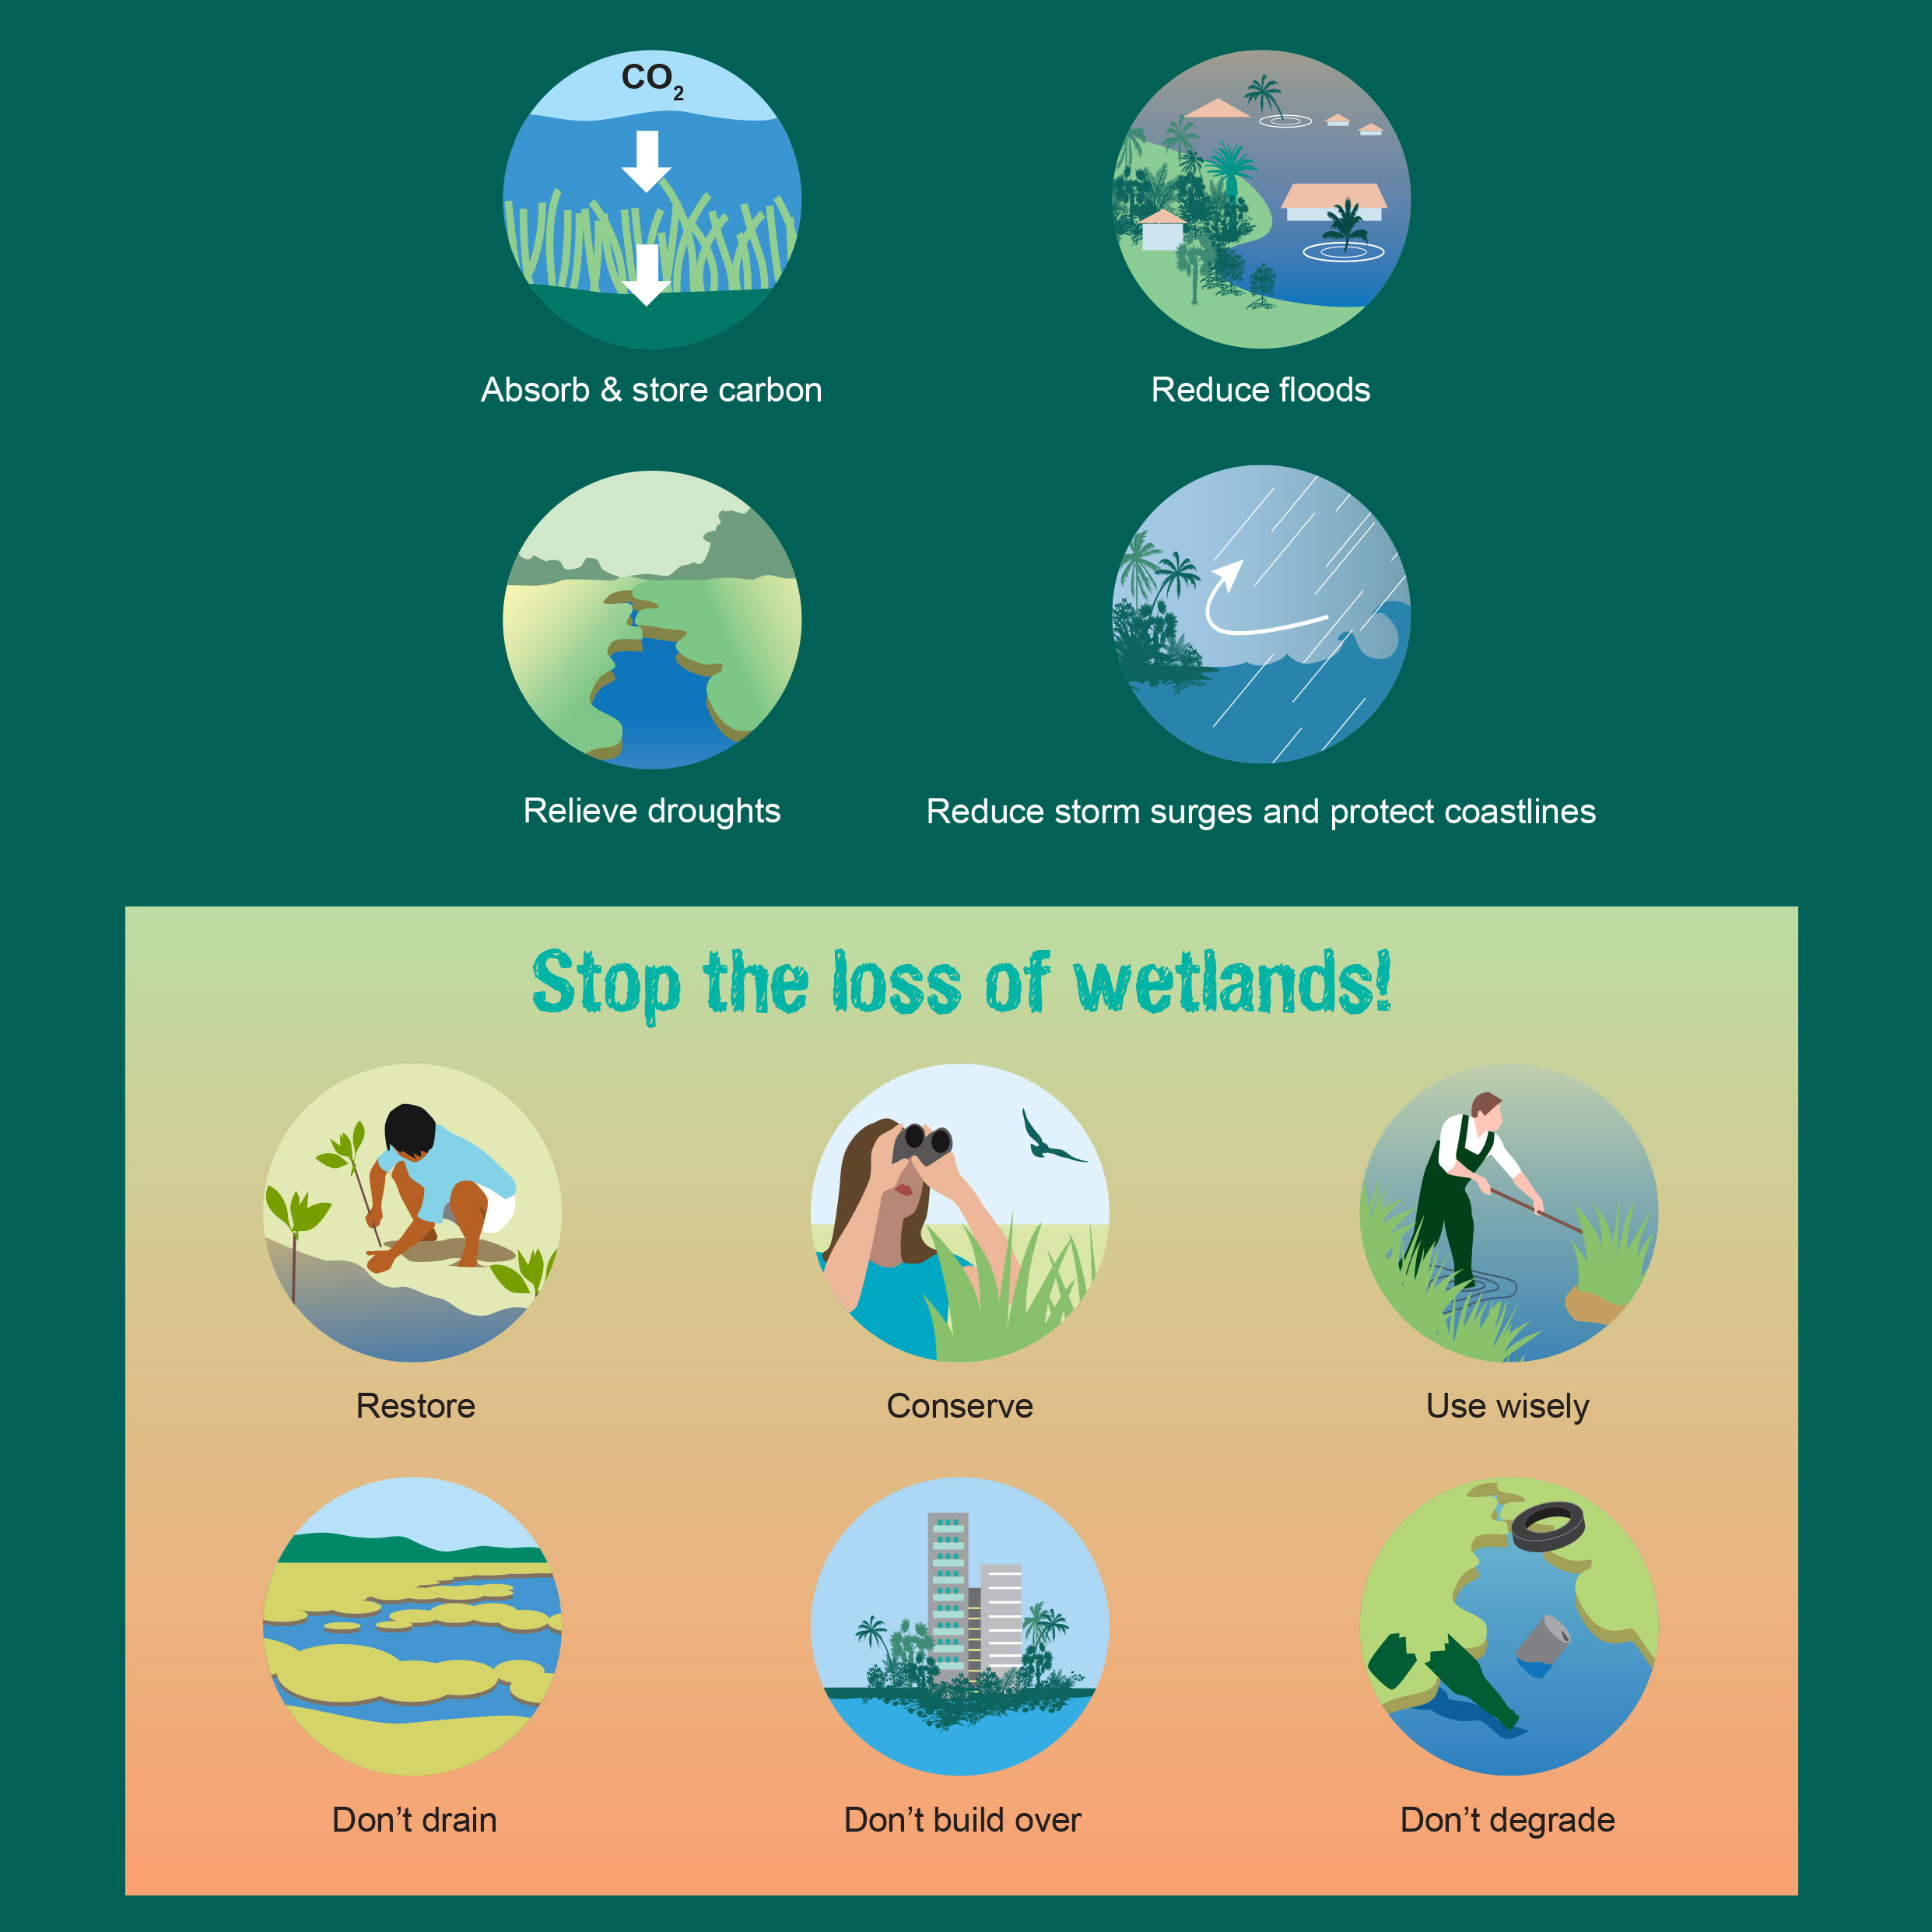 Wetland help us cope